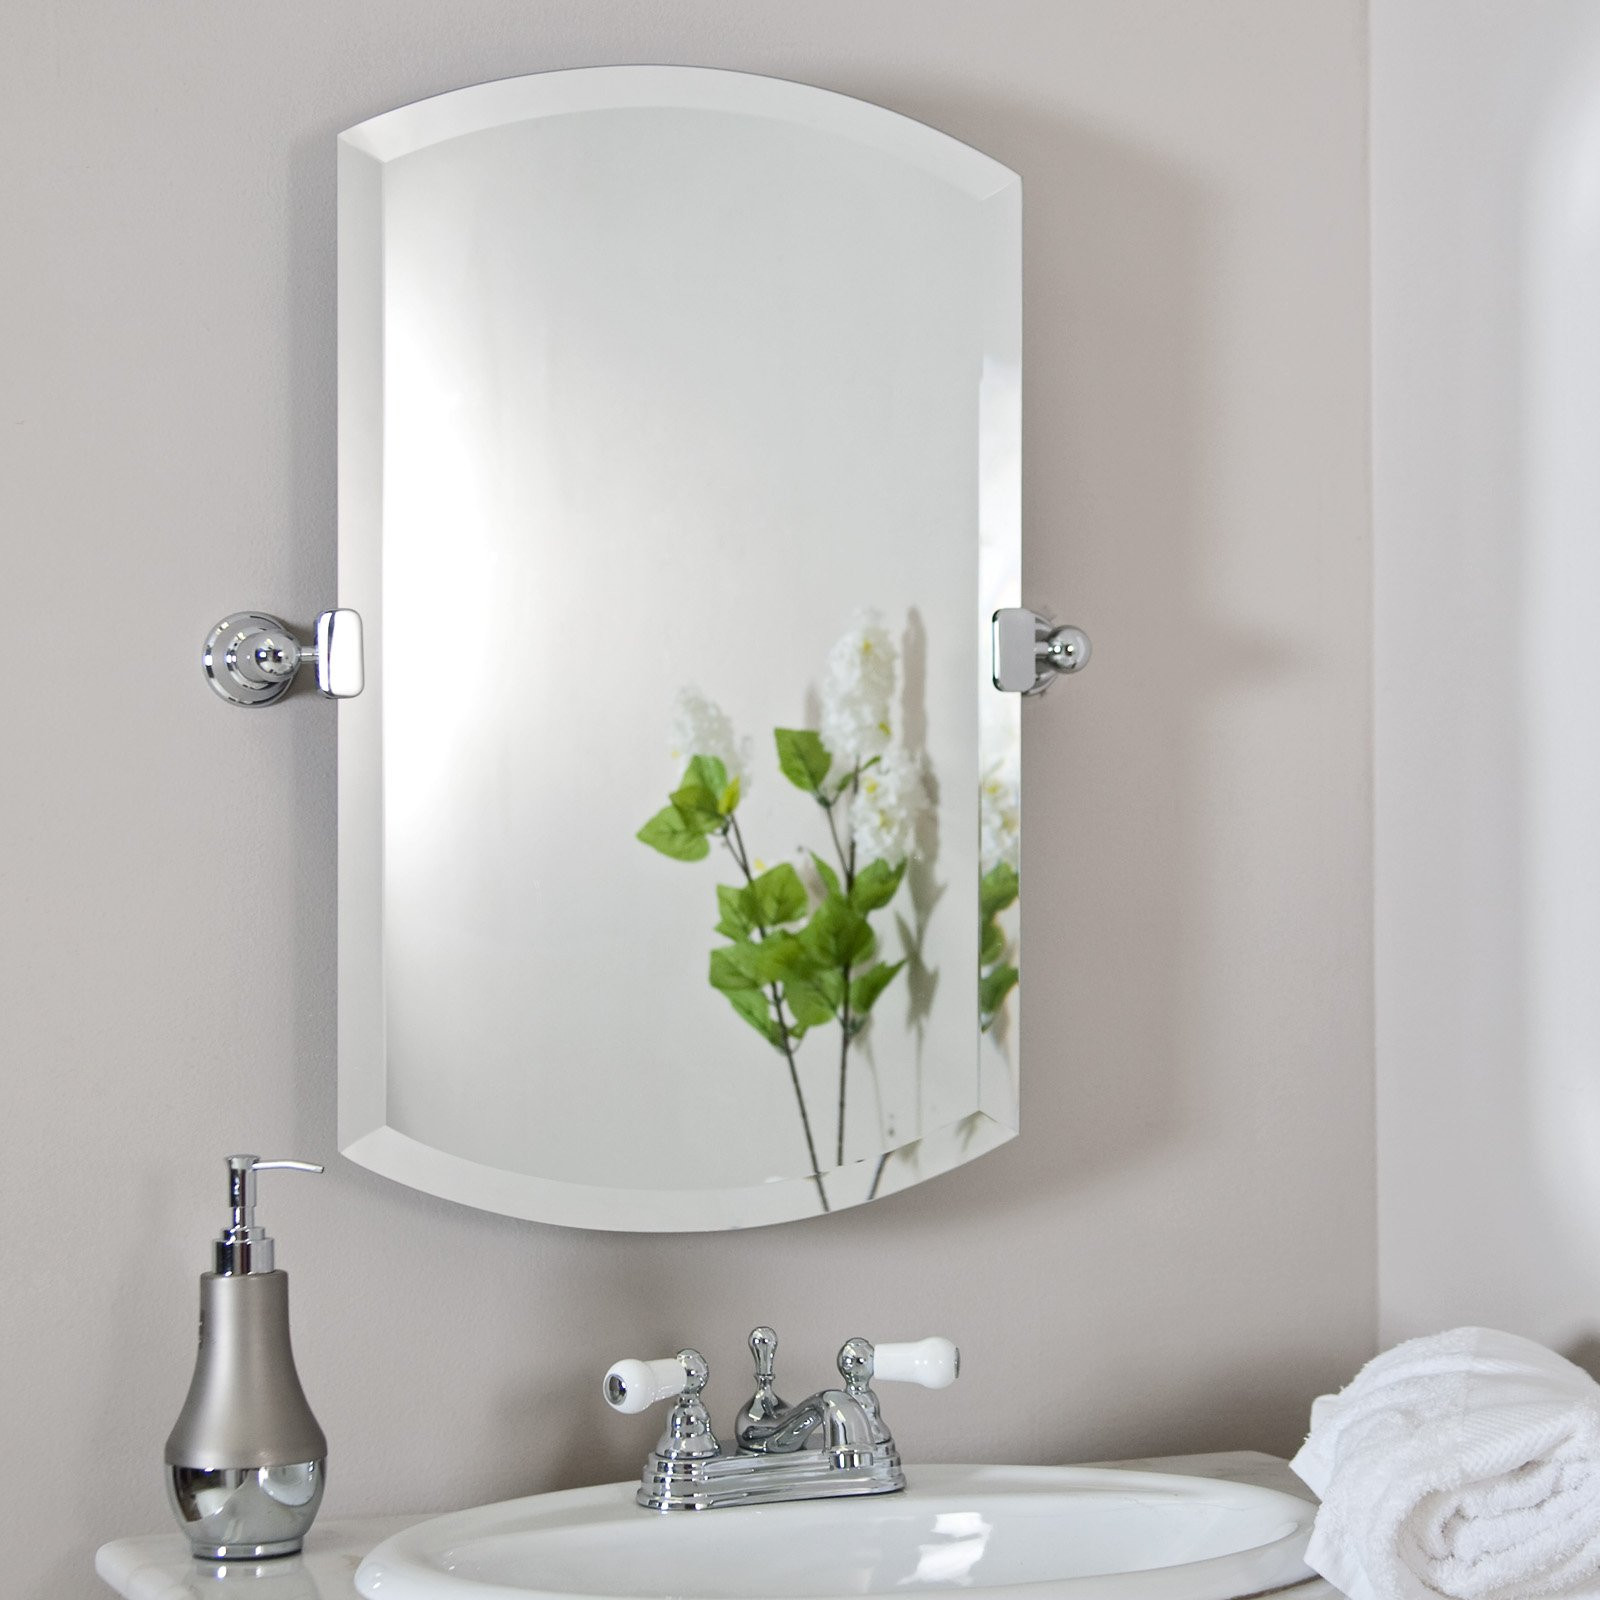 Framed Bathroom Mirror Ideas
 Bathroom Mirror Designs and Decorative Ideas